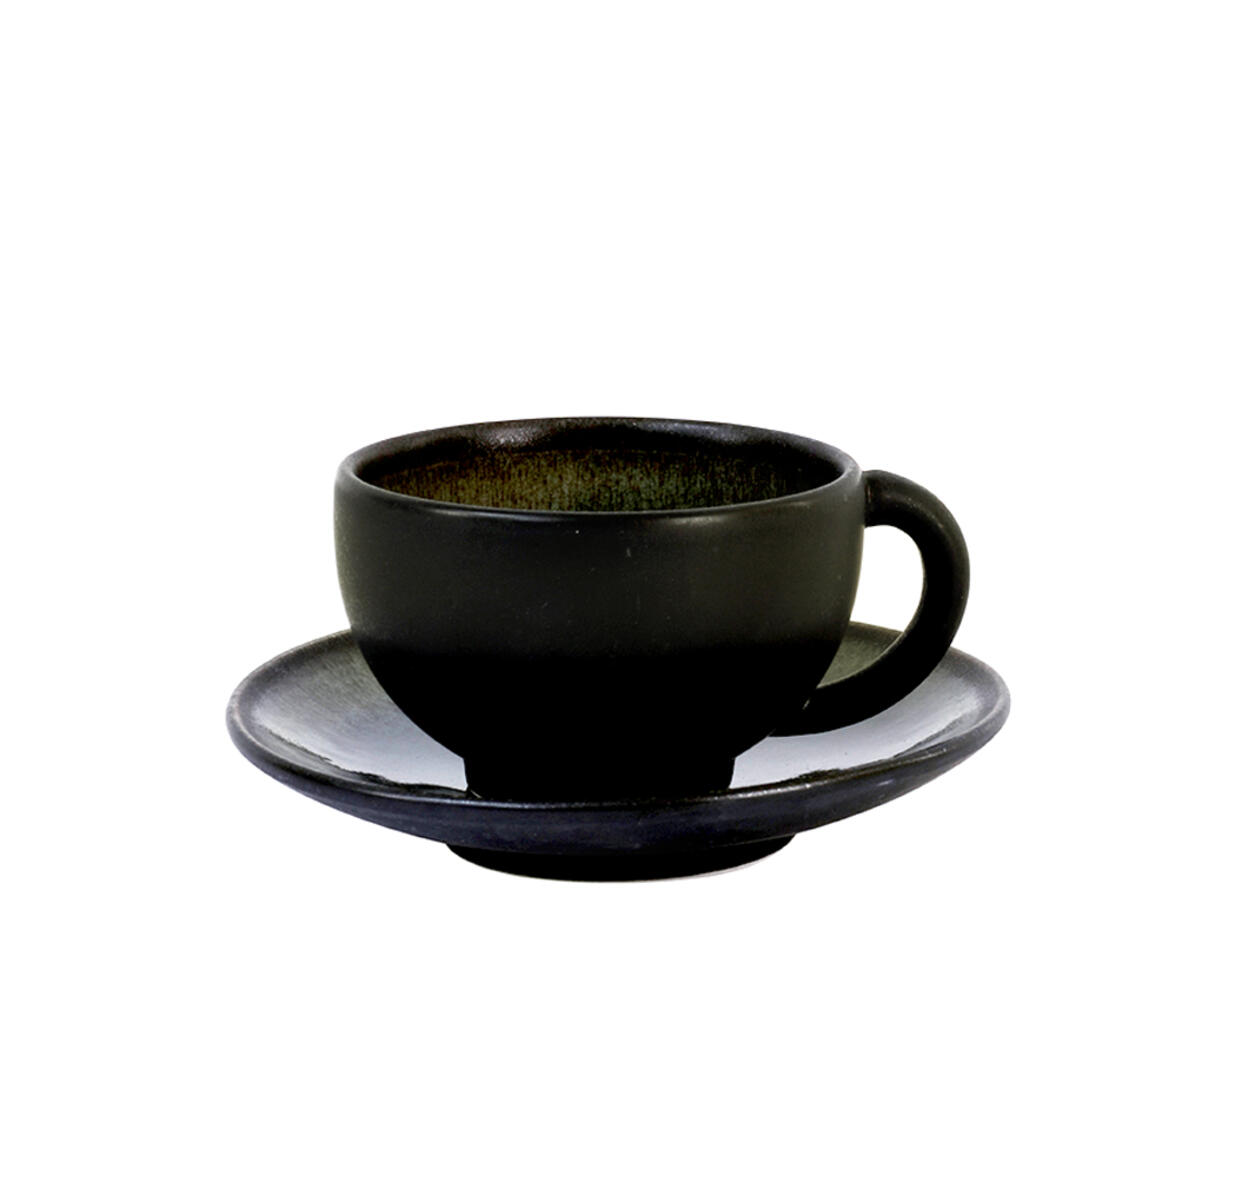 cup & saucer - l tourron samoa ceramic manufacturer